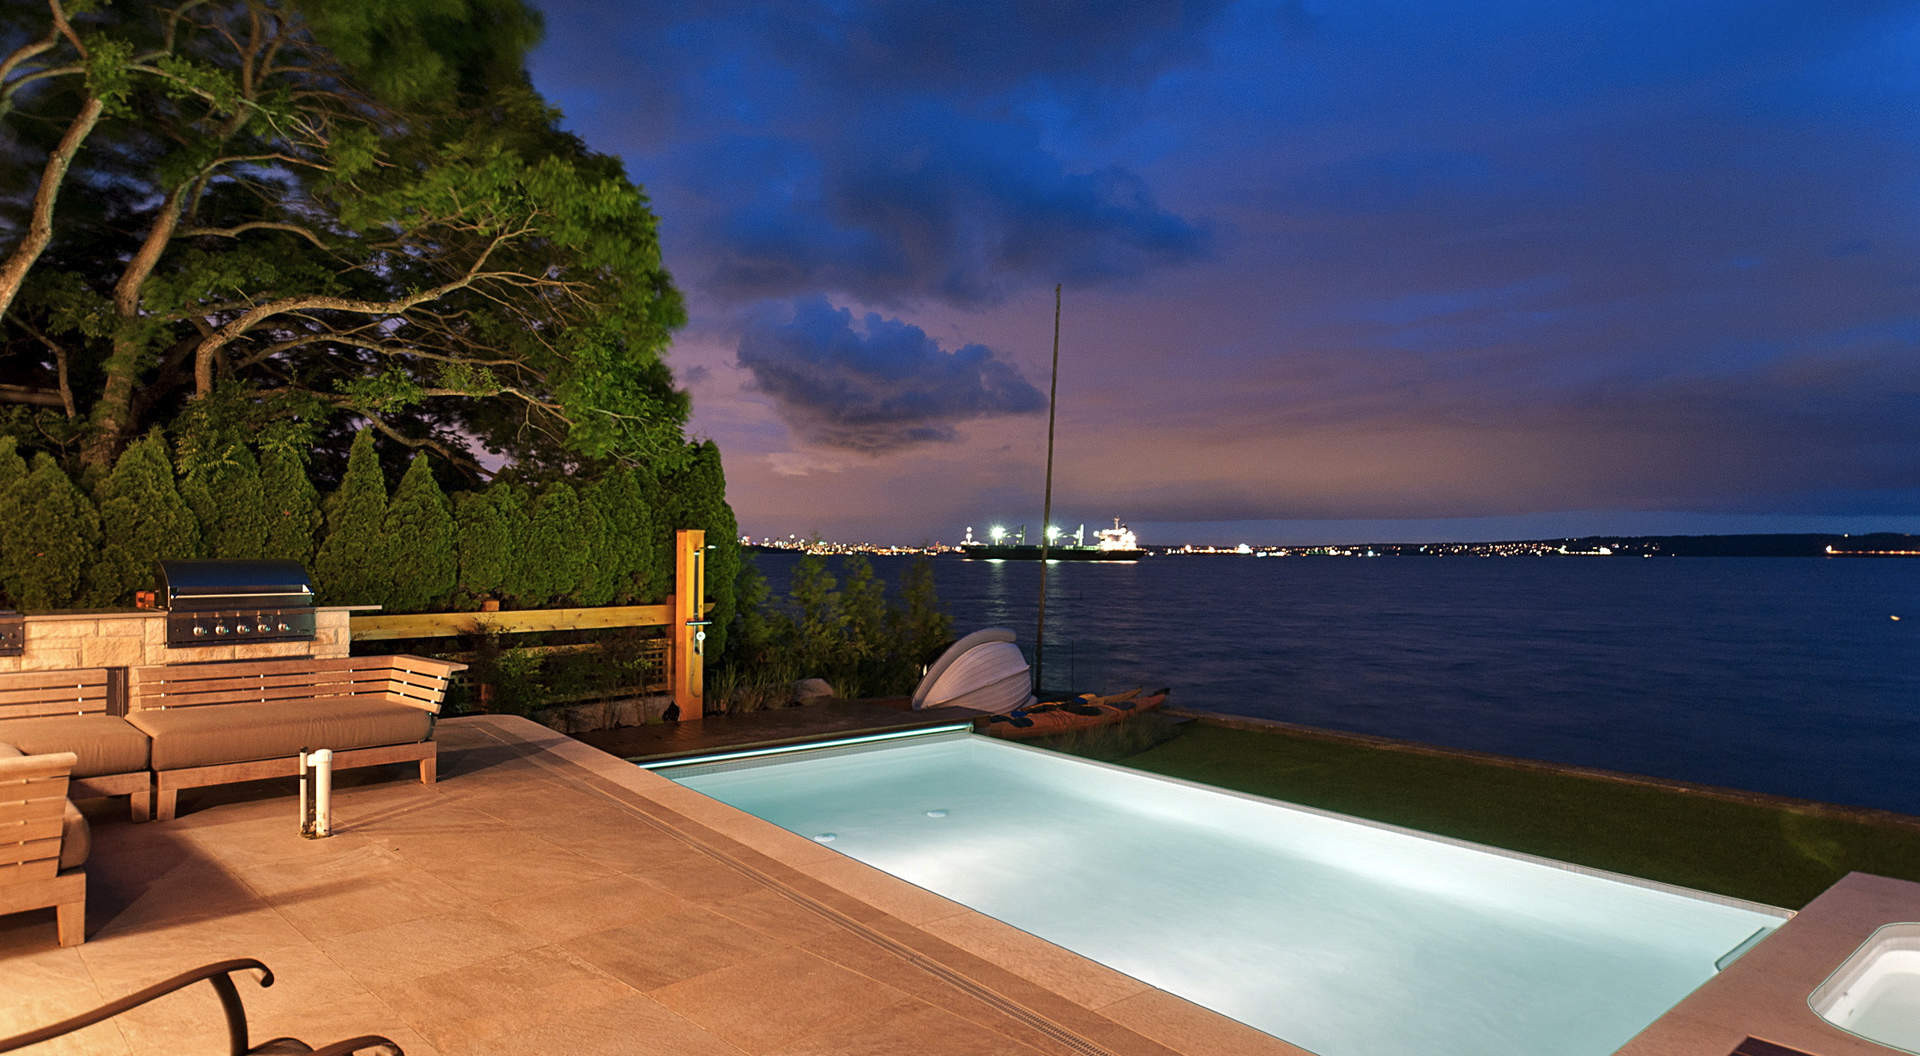 Terraza climatizada fabuloso y piscina exterior con jacuzzi burbujeante